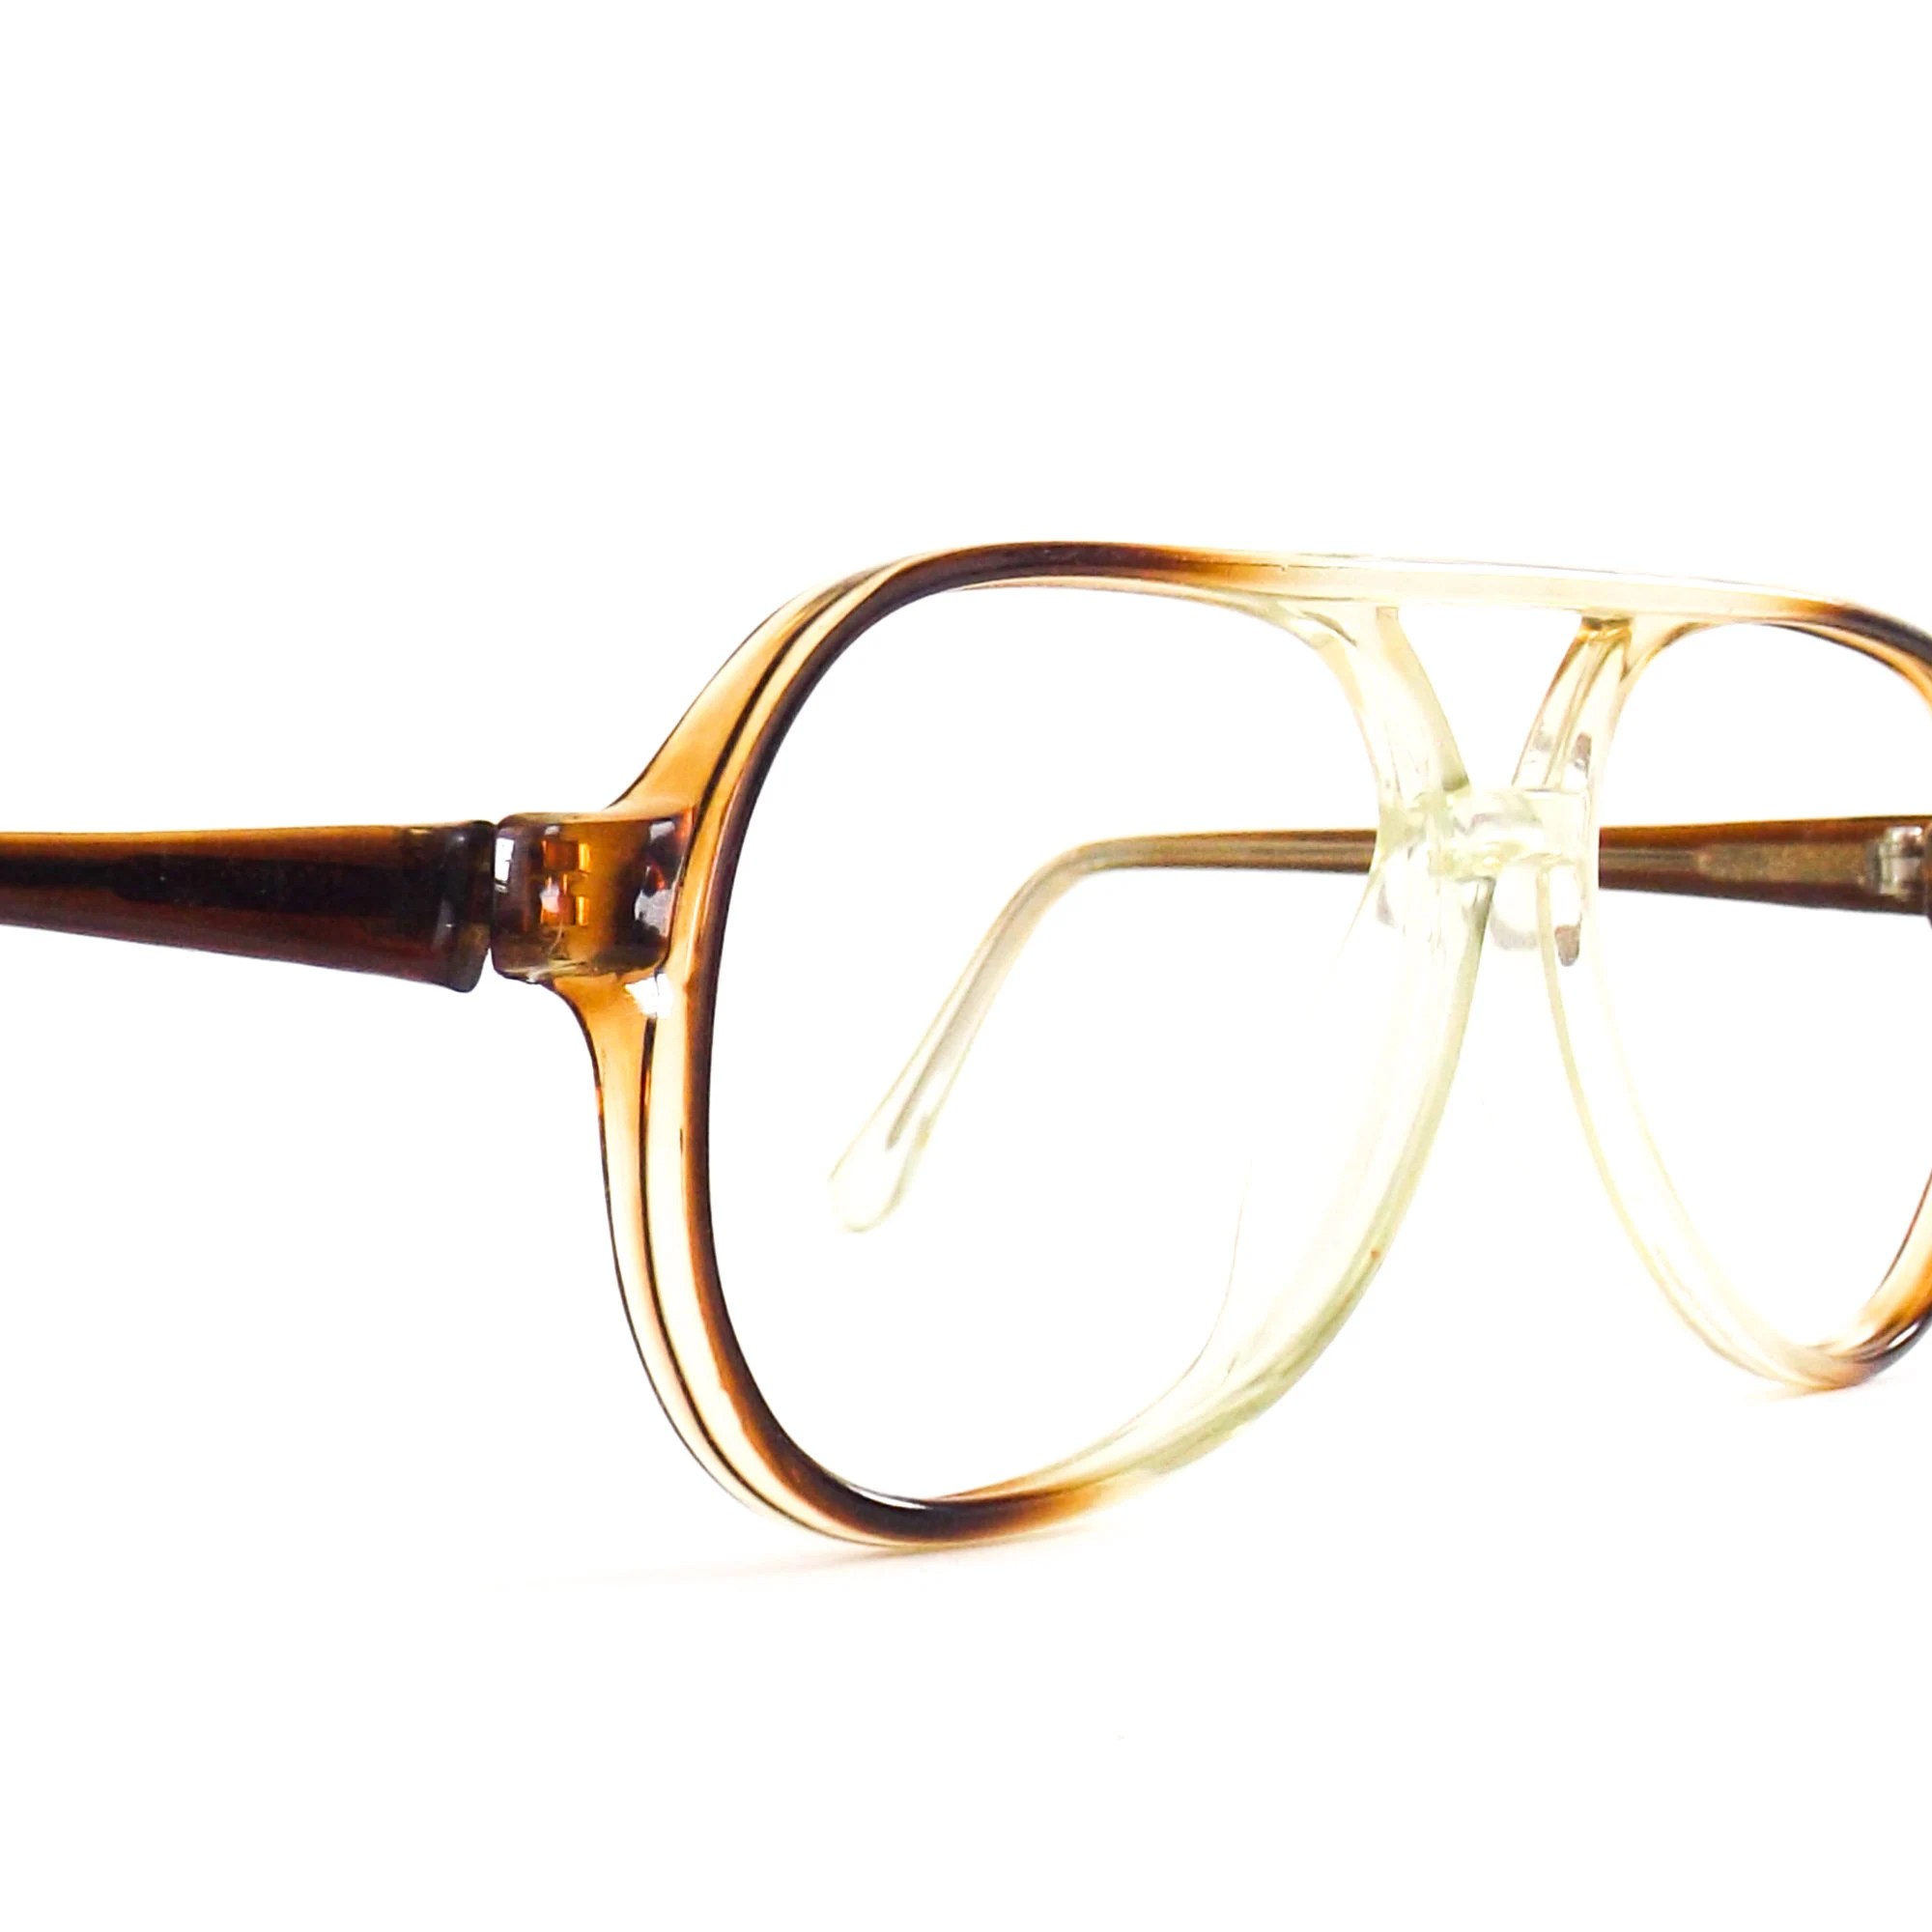 Price List Offers Vintage 80s Mens Aviator Eyeglass